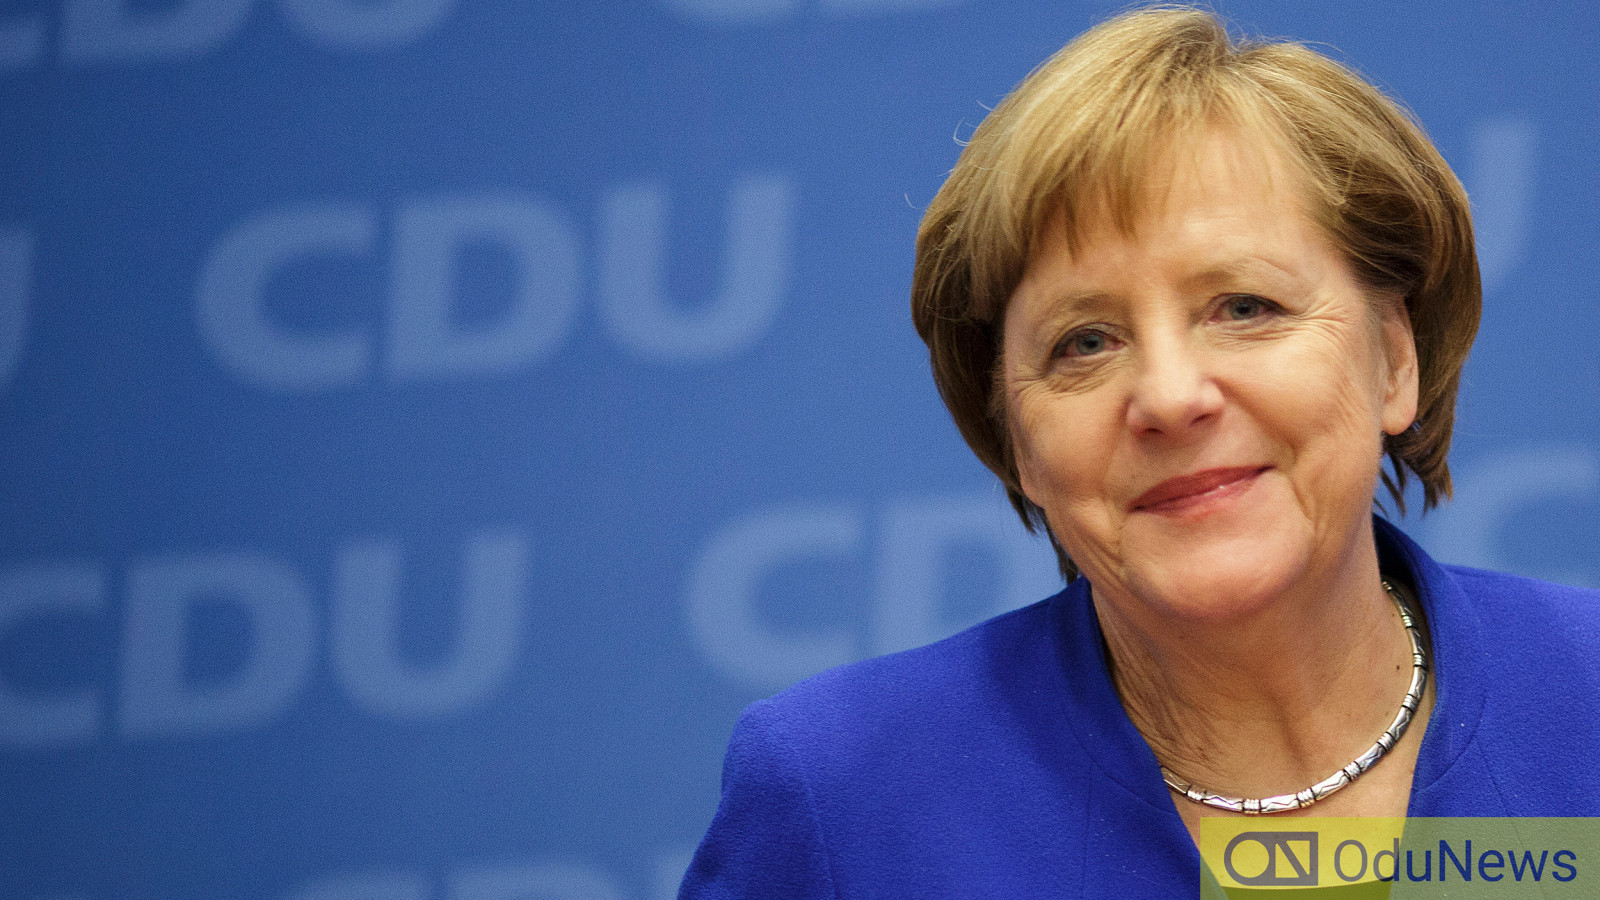 Angela Merkel Tops Forbes List Of Most Powerful Women